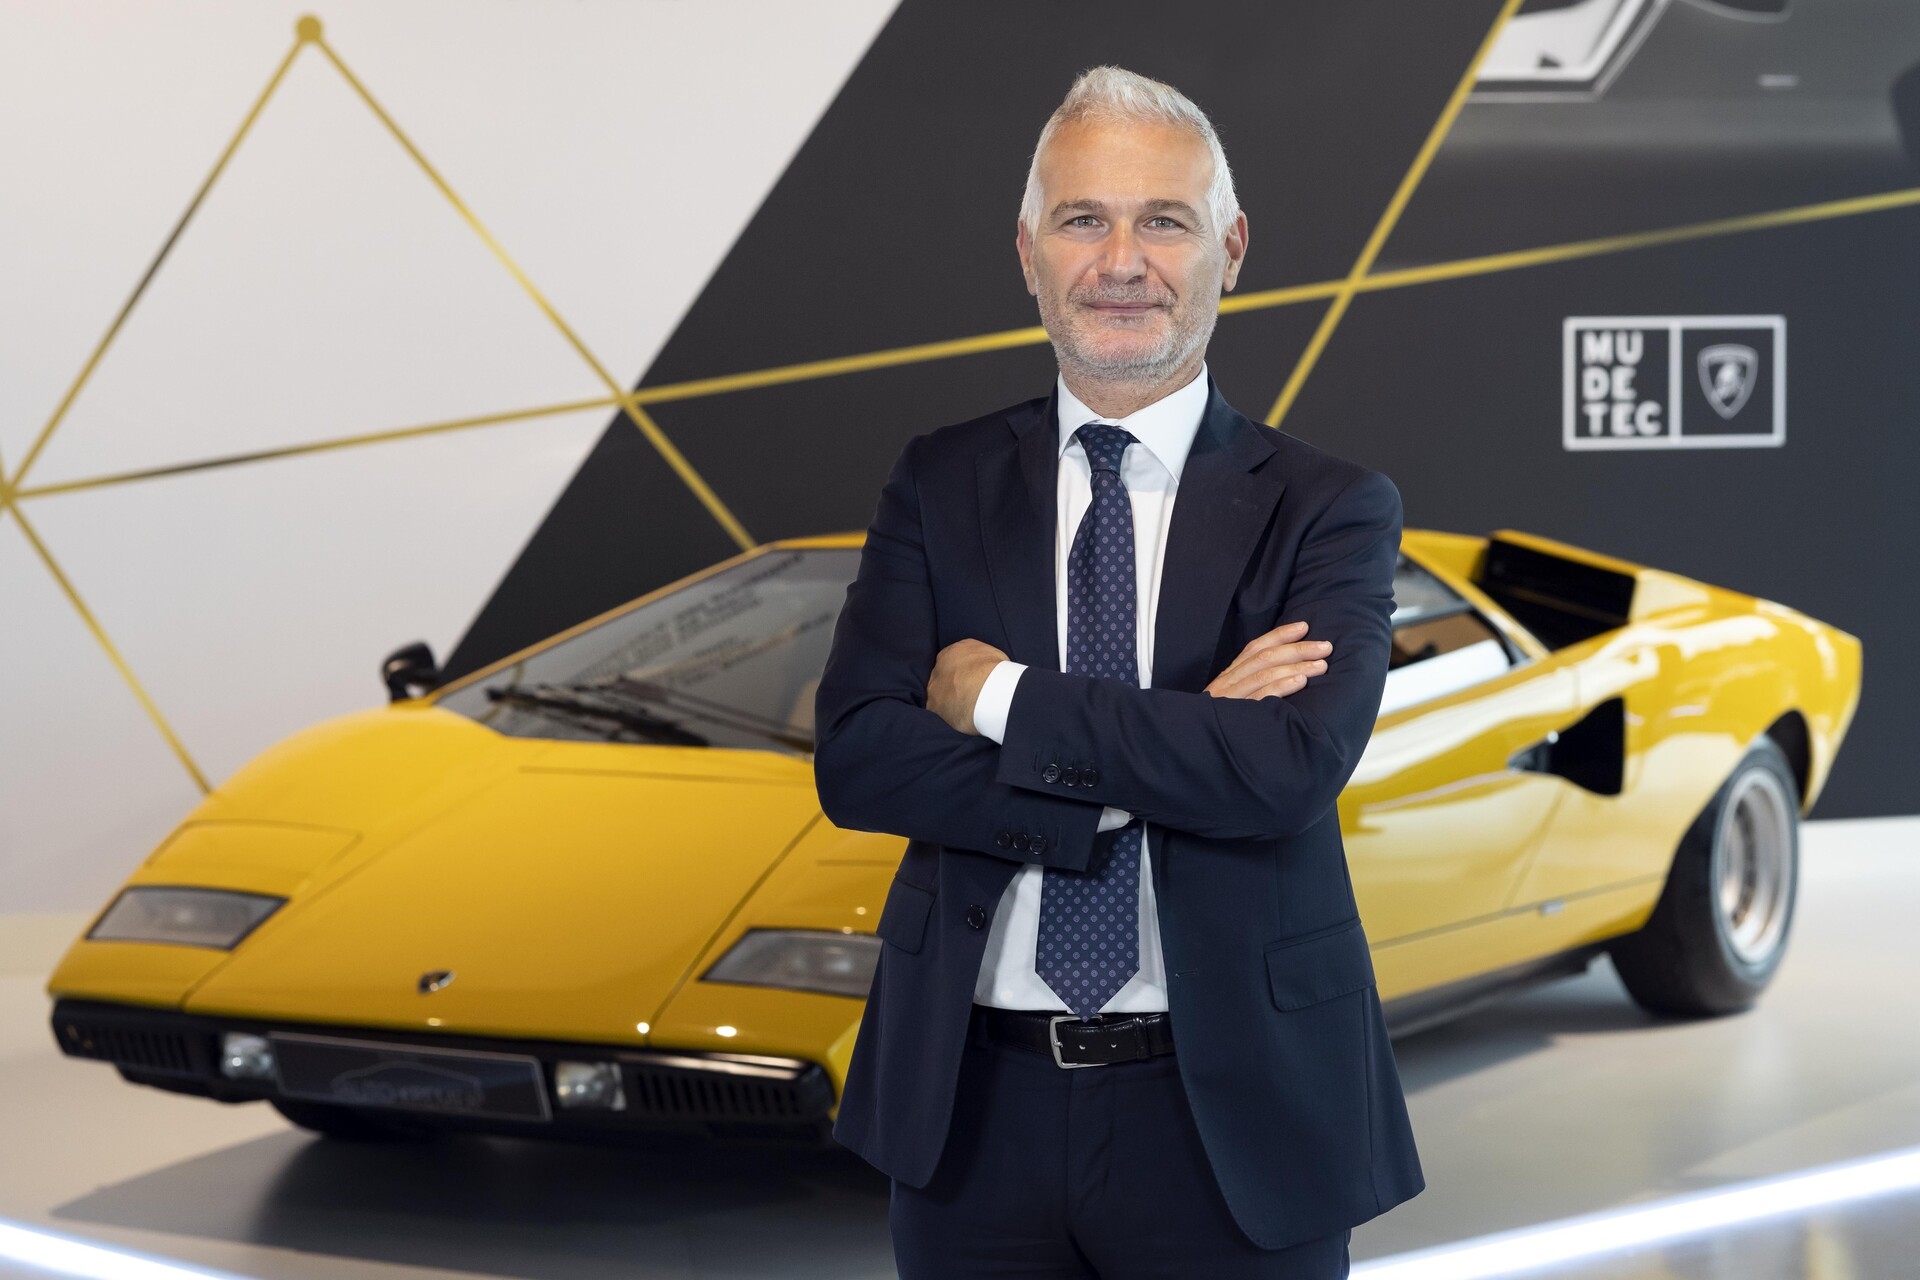 Lanzador: Christian Mastro는 Automobili Lamborghini의 마케팅 이사입니다.